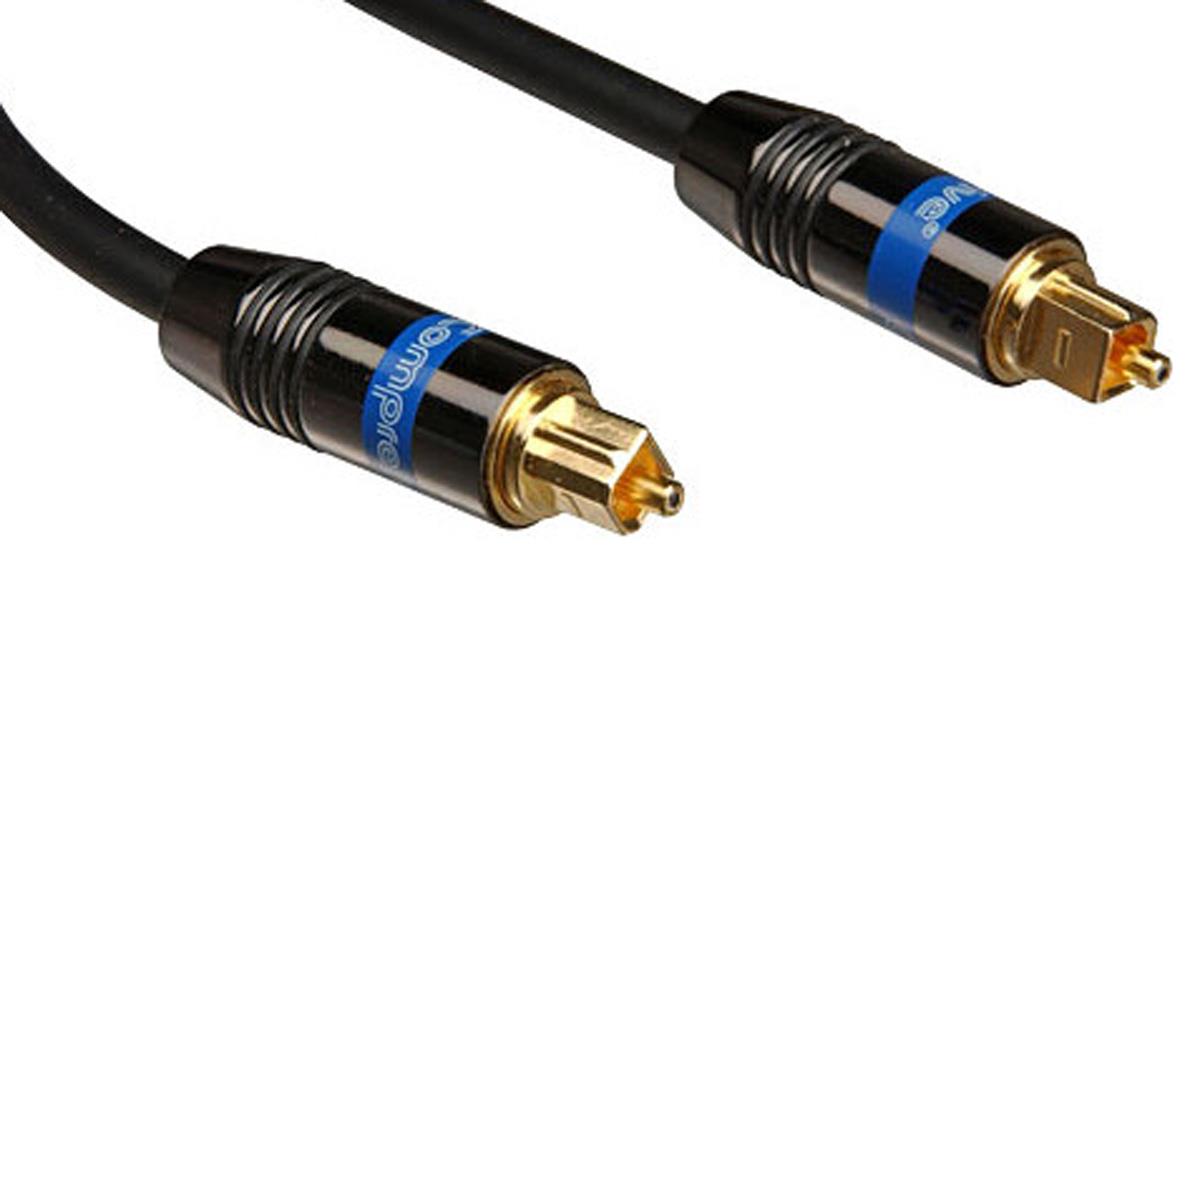 Image of Comprehensive 25' Pro AV/IT Advanced Series Digital Toslink Audio Cable